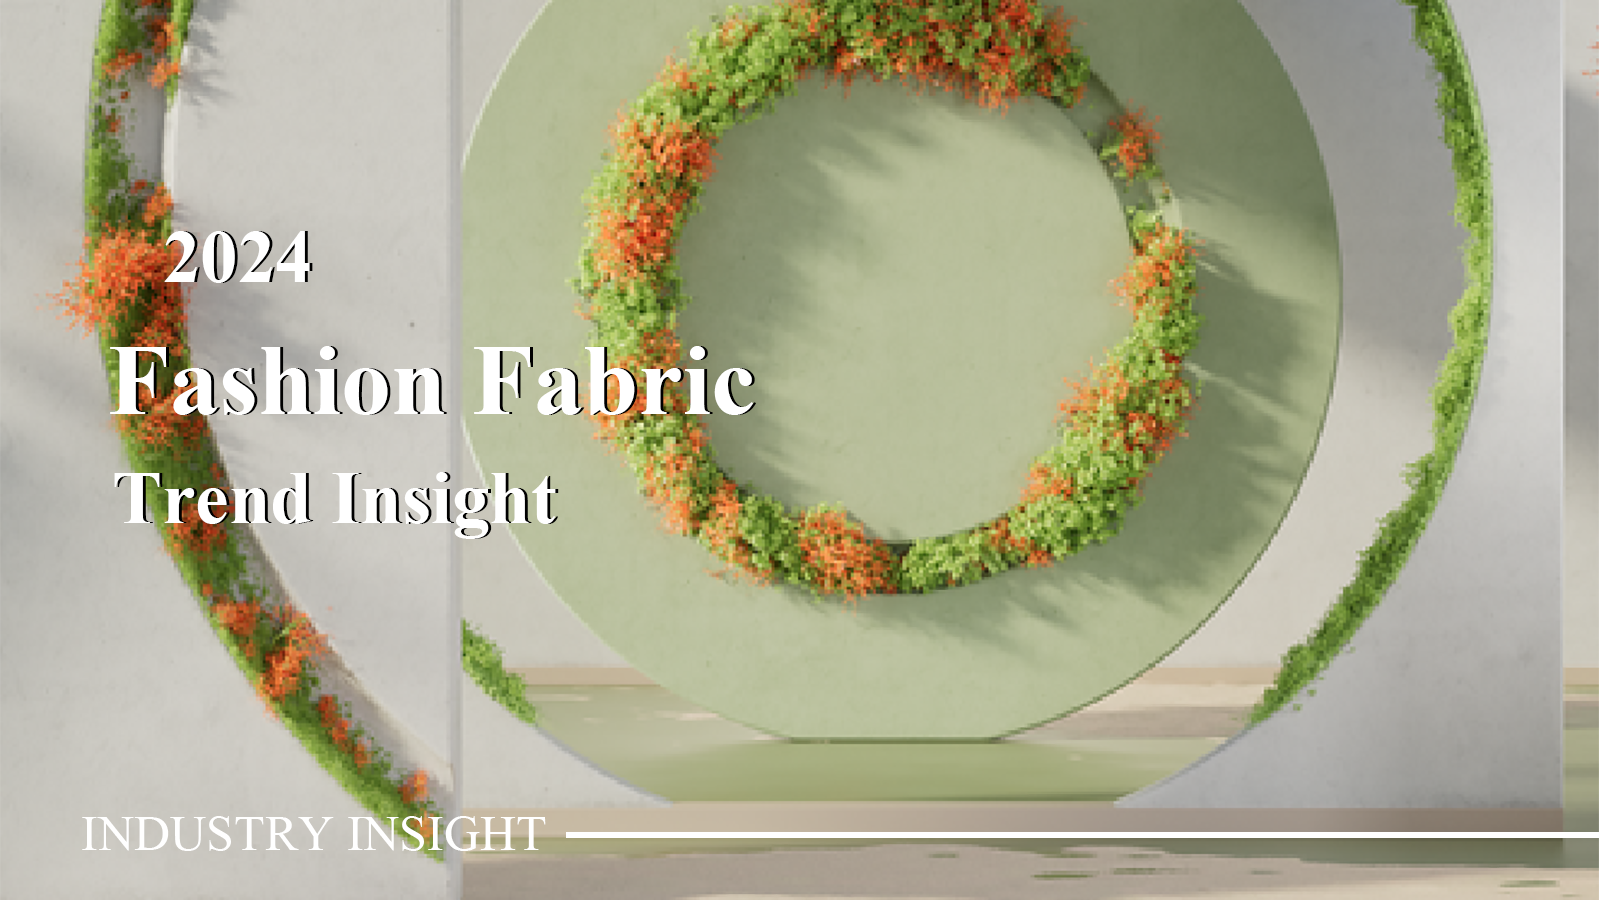 2024 Fashion Fabric Industry Insight